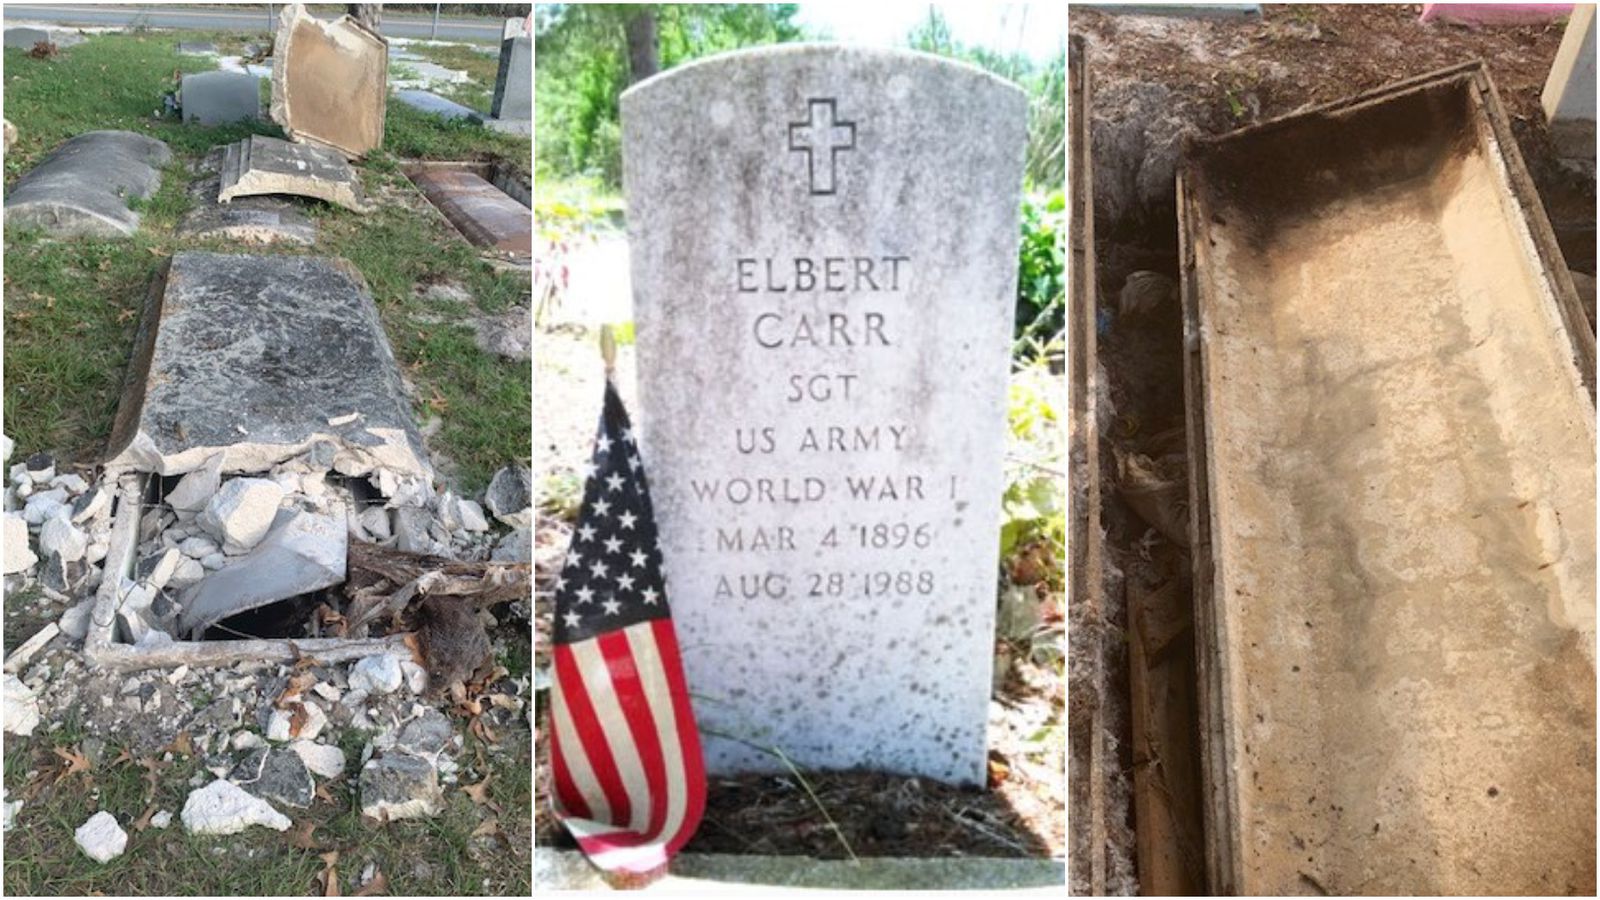 Florida Men Arrested for Robbing the Graves of Heroic Veterans